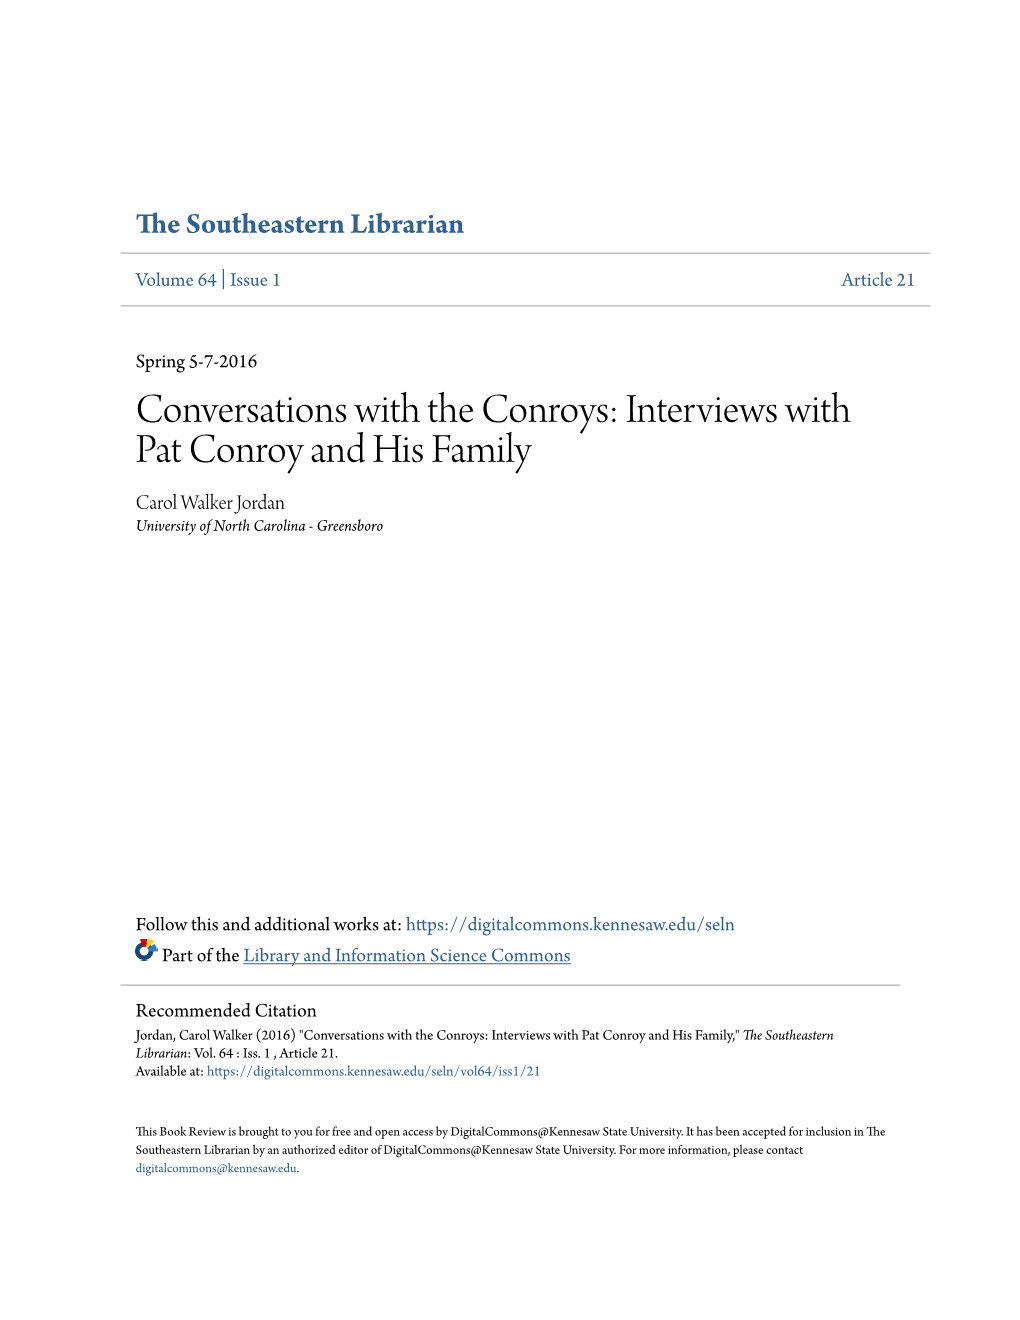 Interviews with Pat Conroy and His Family Carol Walker Jordan University of North Carolina - Greensboro